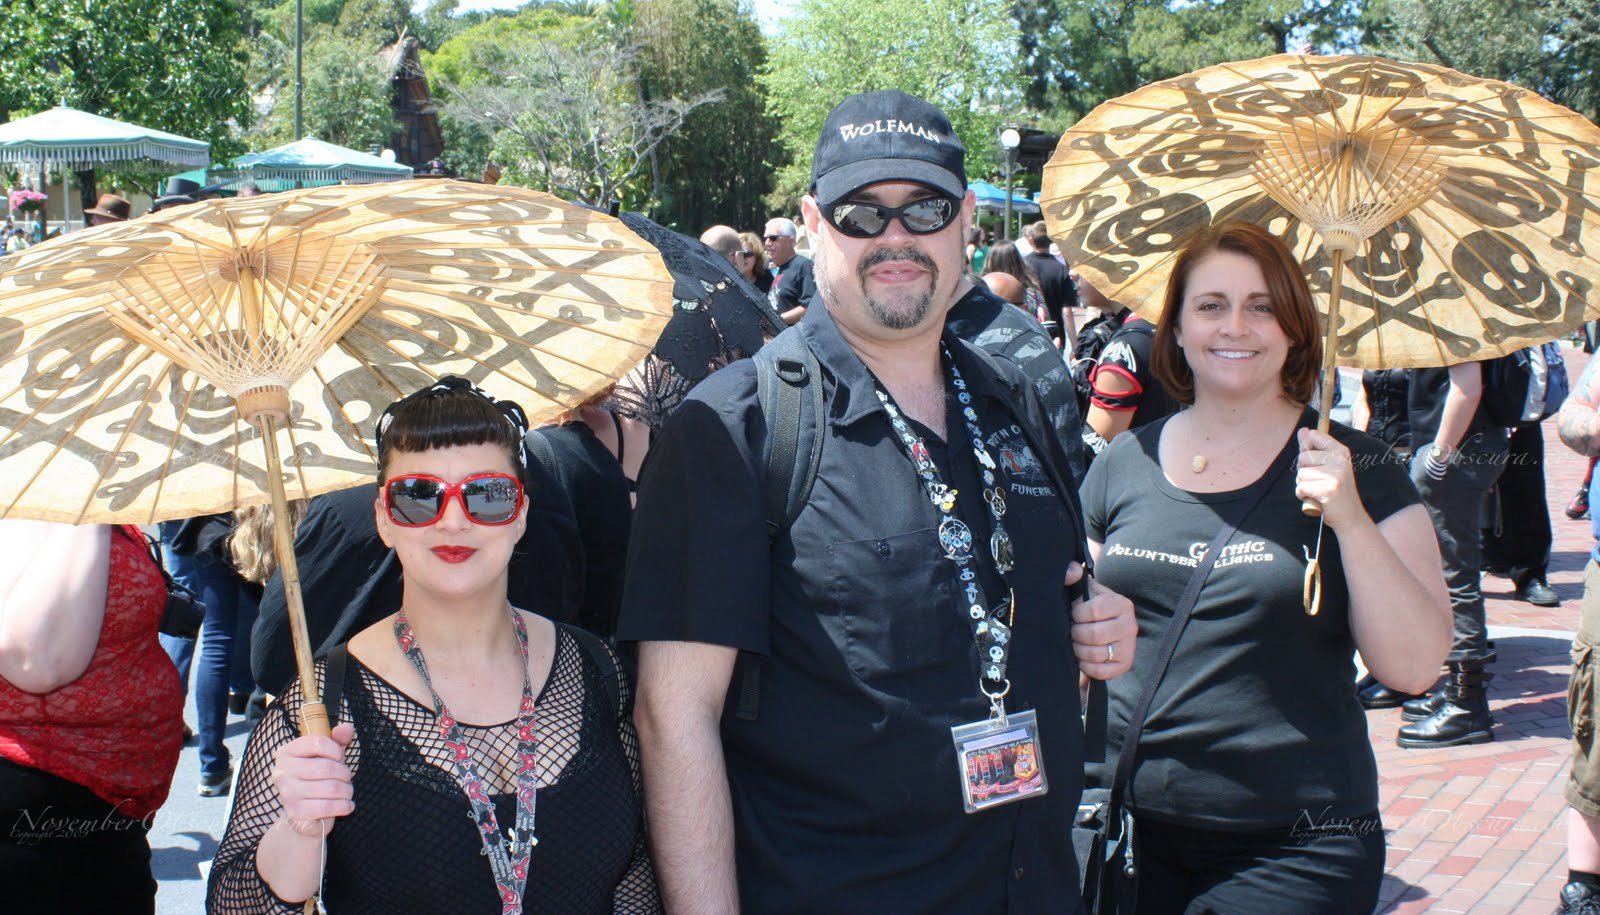 Gothic Tea Society: Bats Day at Disneyland- The People